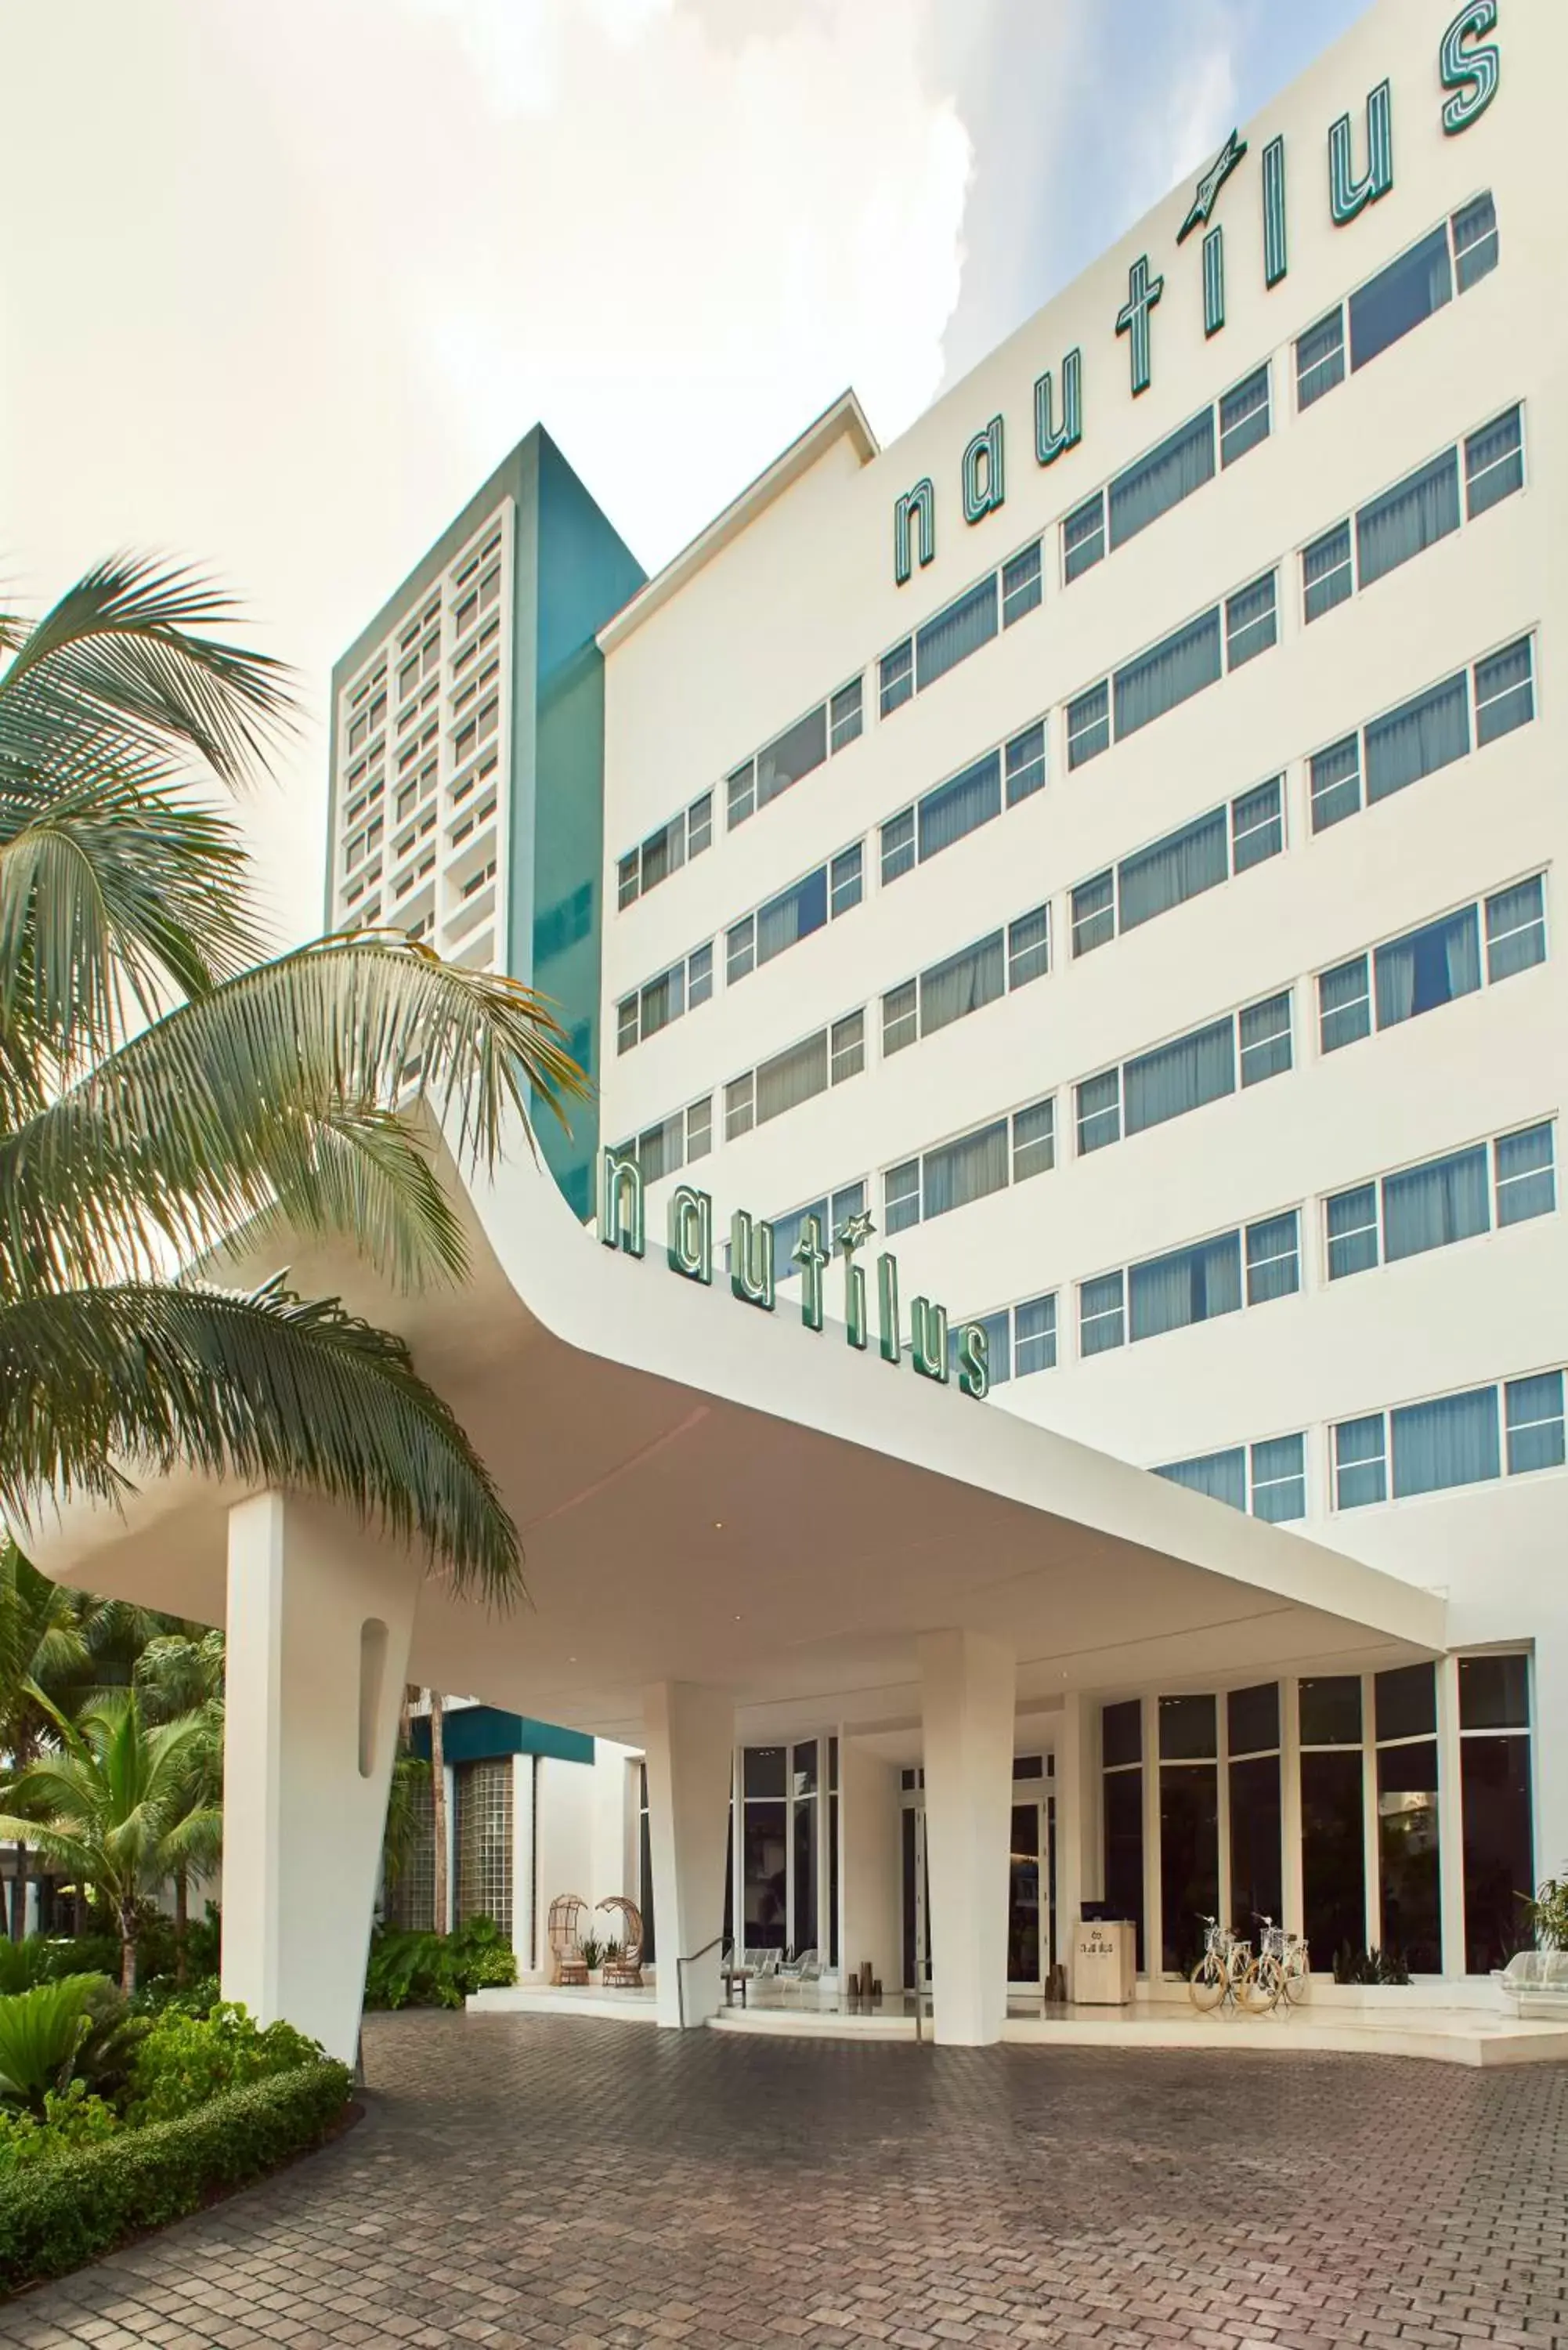 Property building, Facade/Entrance in Nautilus Sonesta Miami Beach